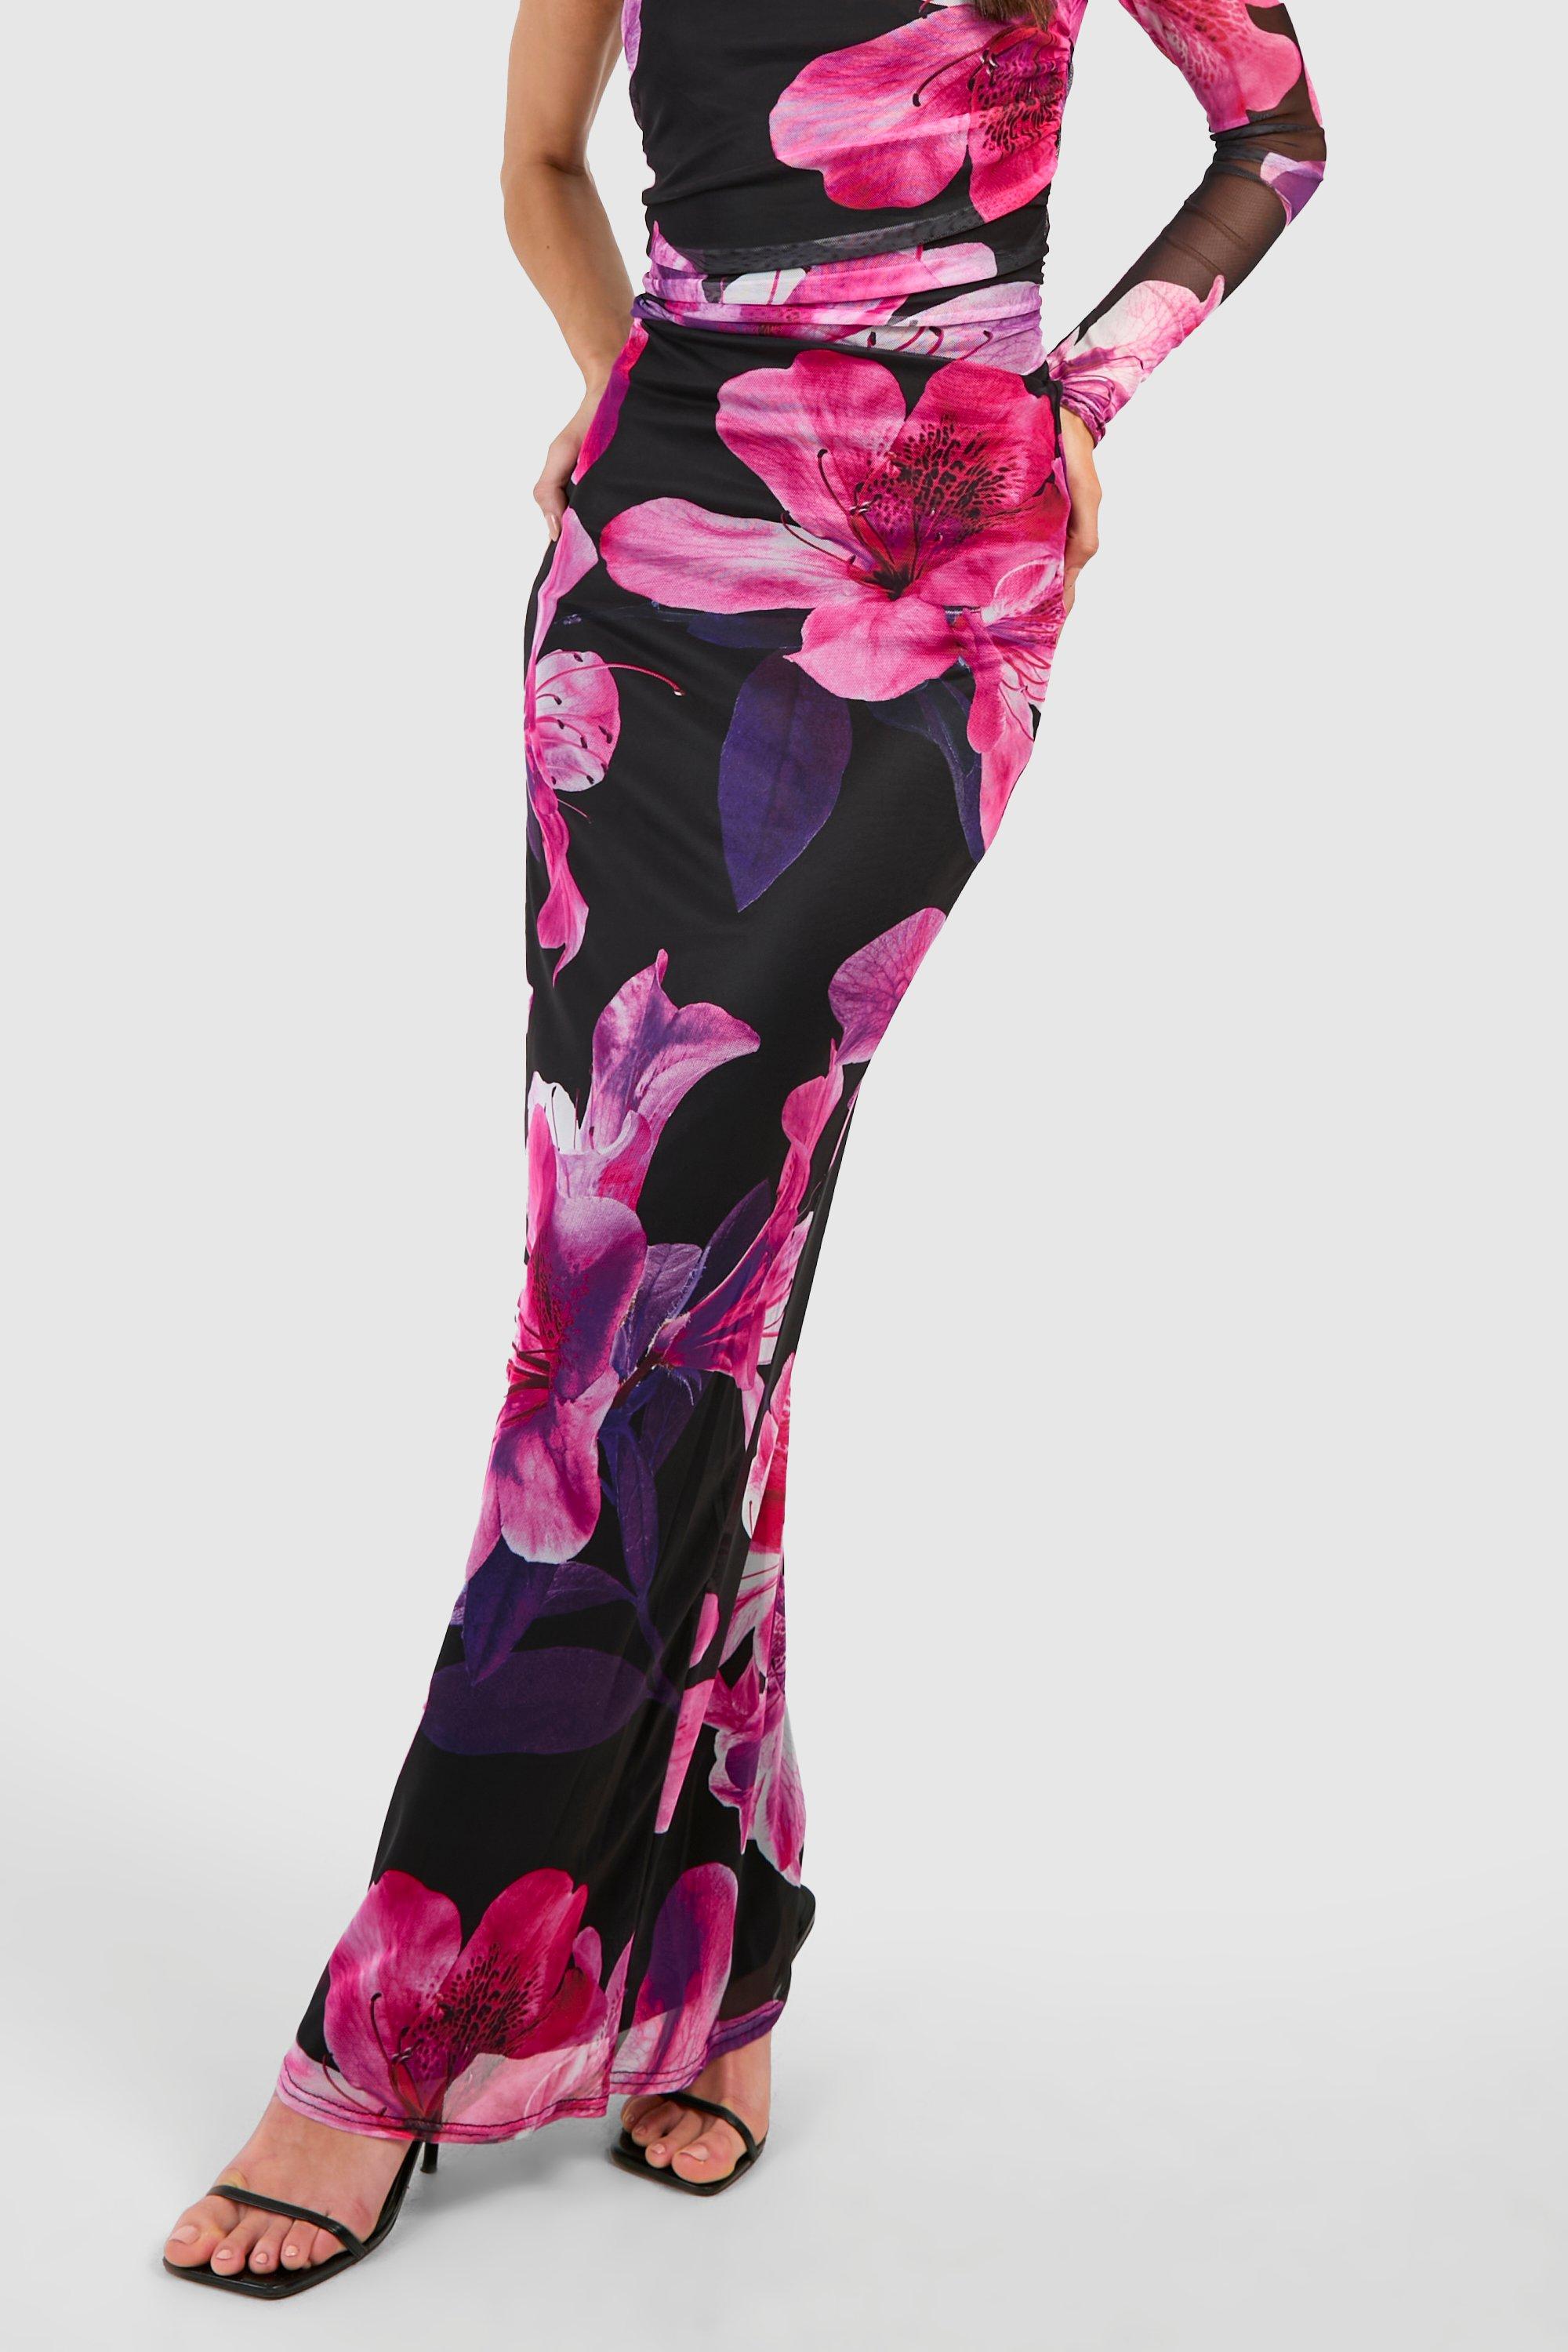 Black & Pink Floral Printed Maxi Flared Skirt